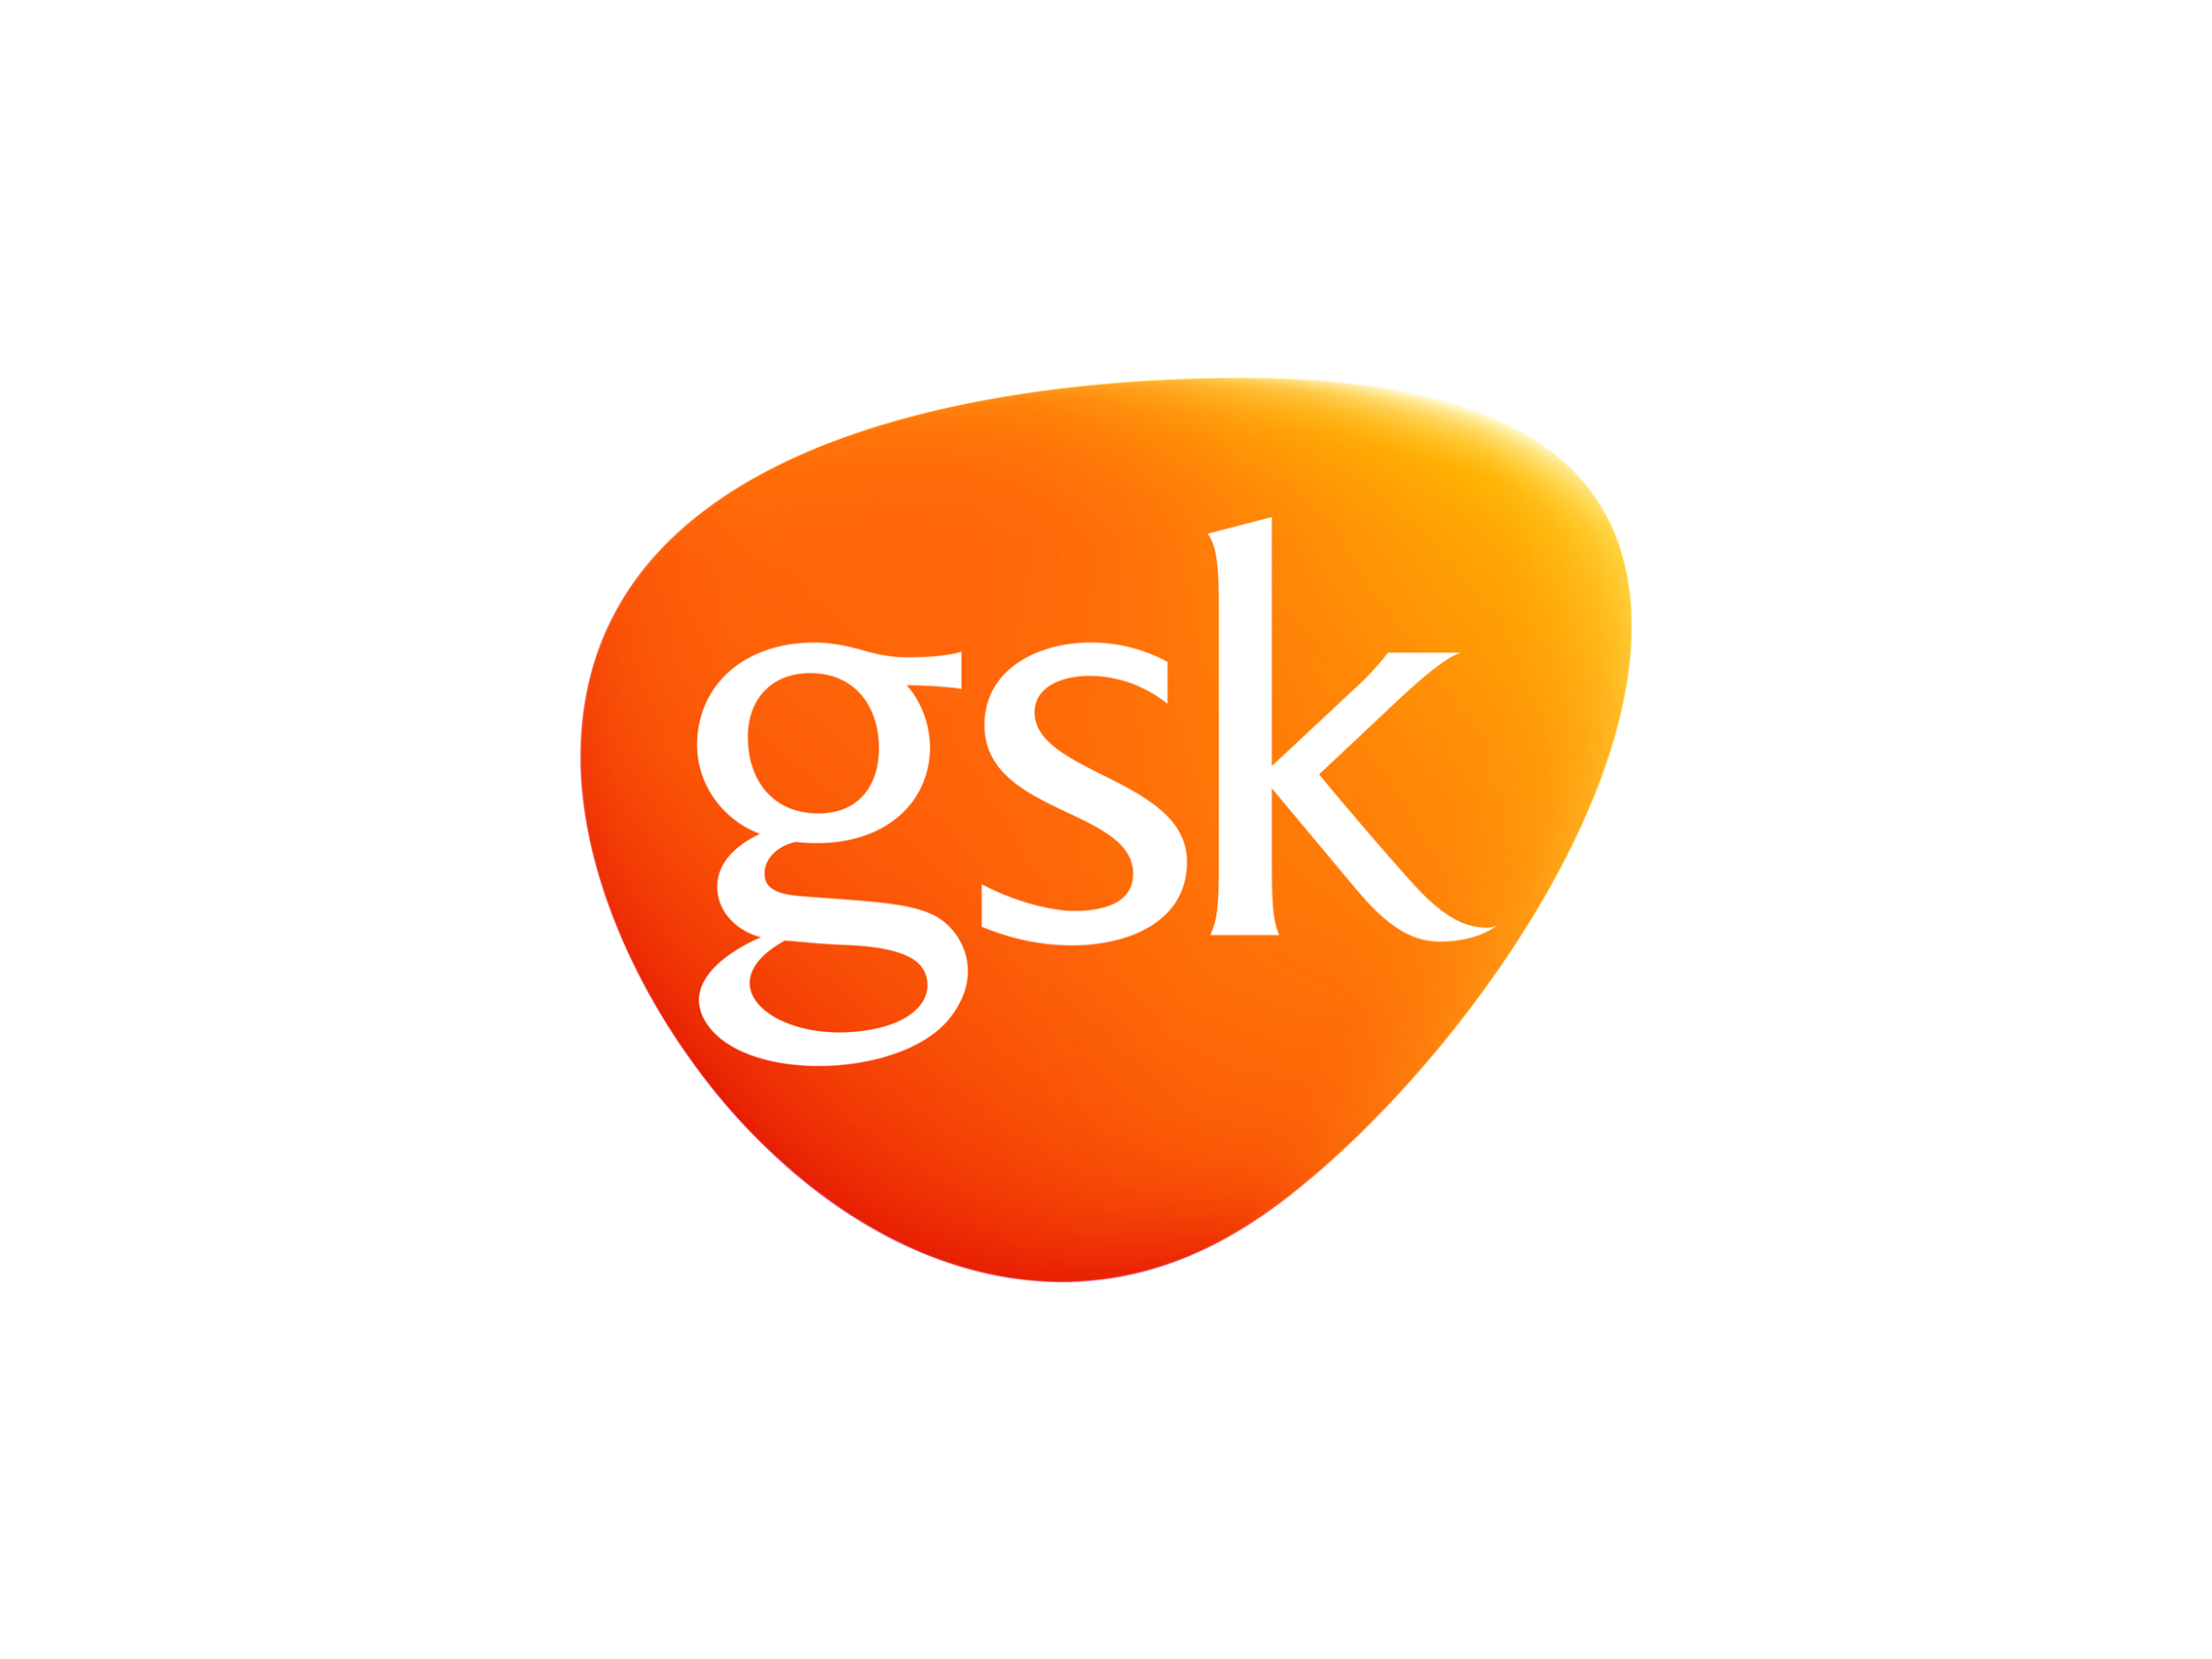 Logo Gsk Png - Logo Gsk Png Hdpng.com 2272, Transparent background PNG HD thumbnail